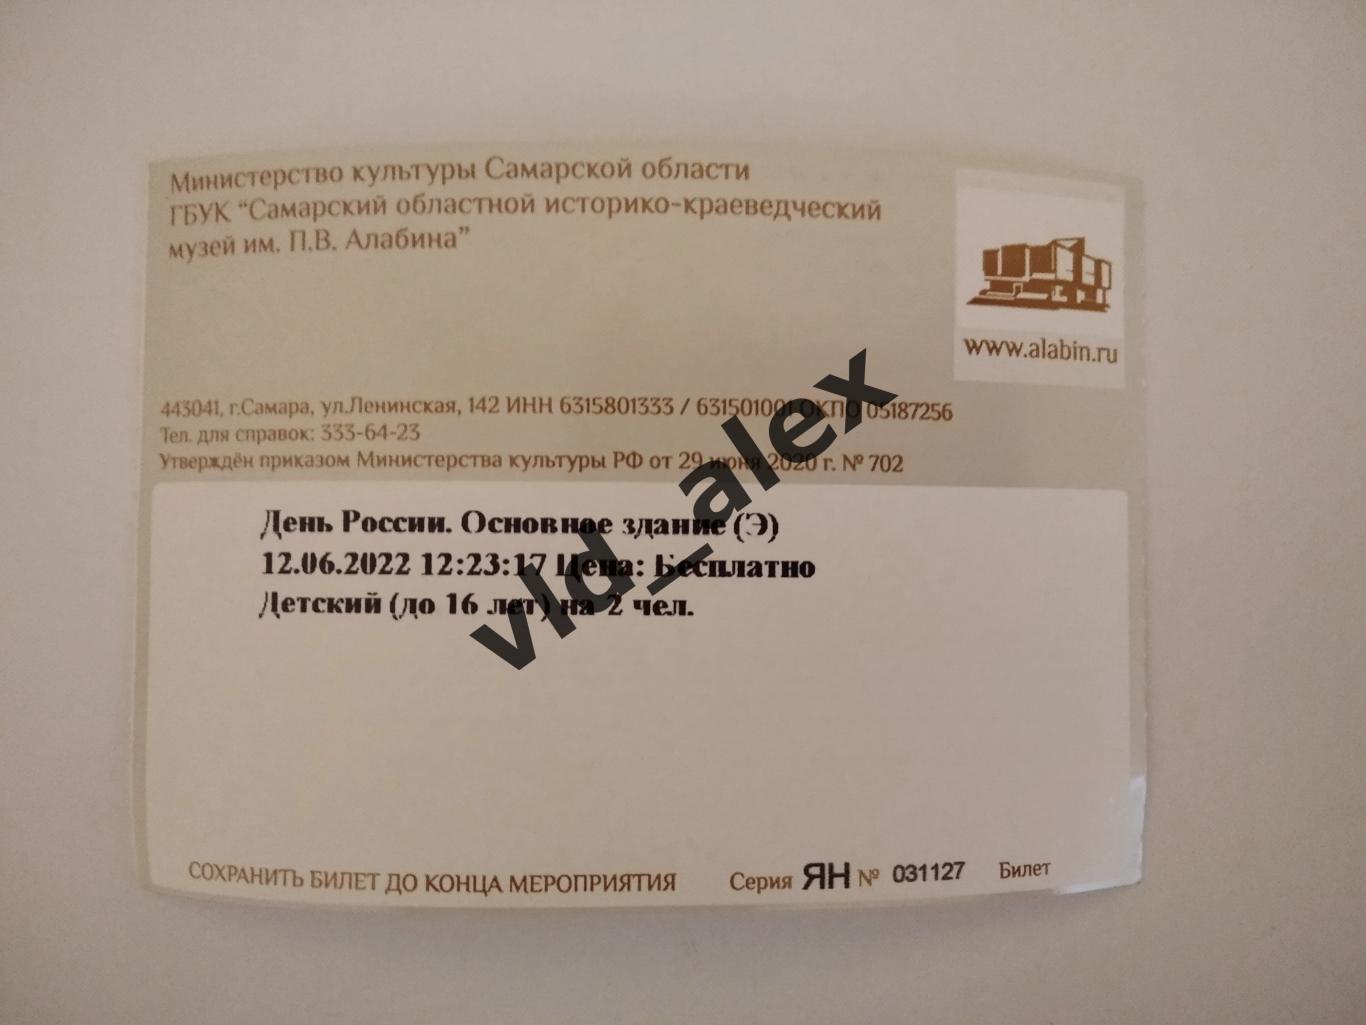 Билет с музея им. Алабина., г.Самара 12.06.2022.